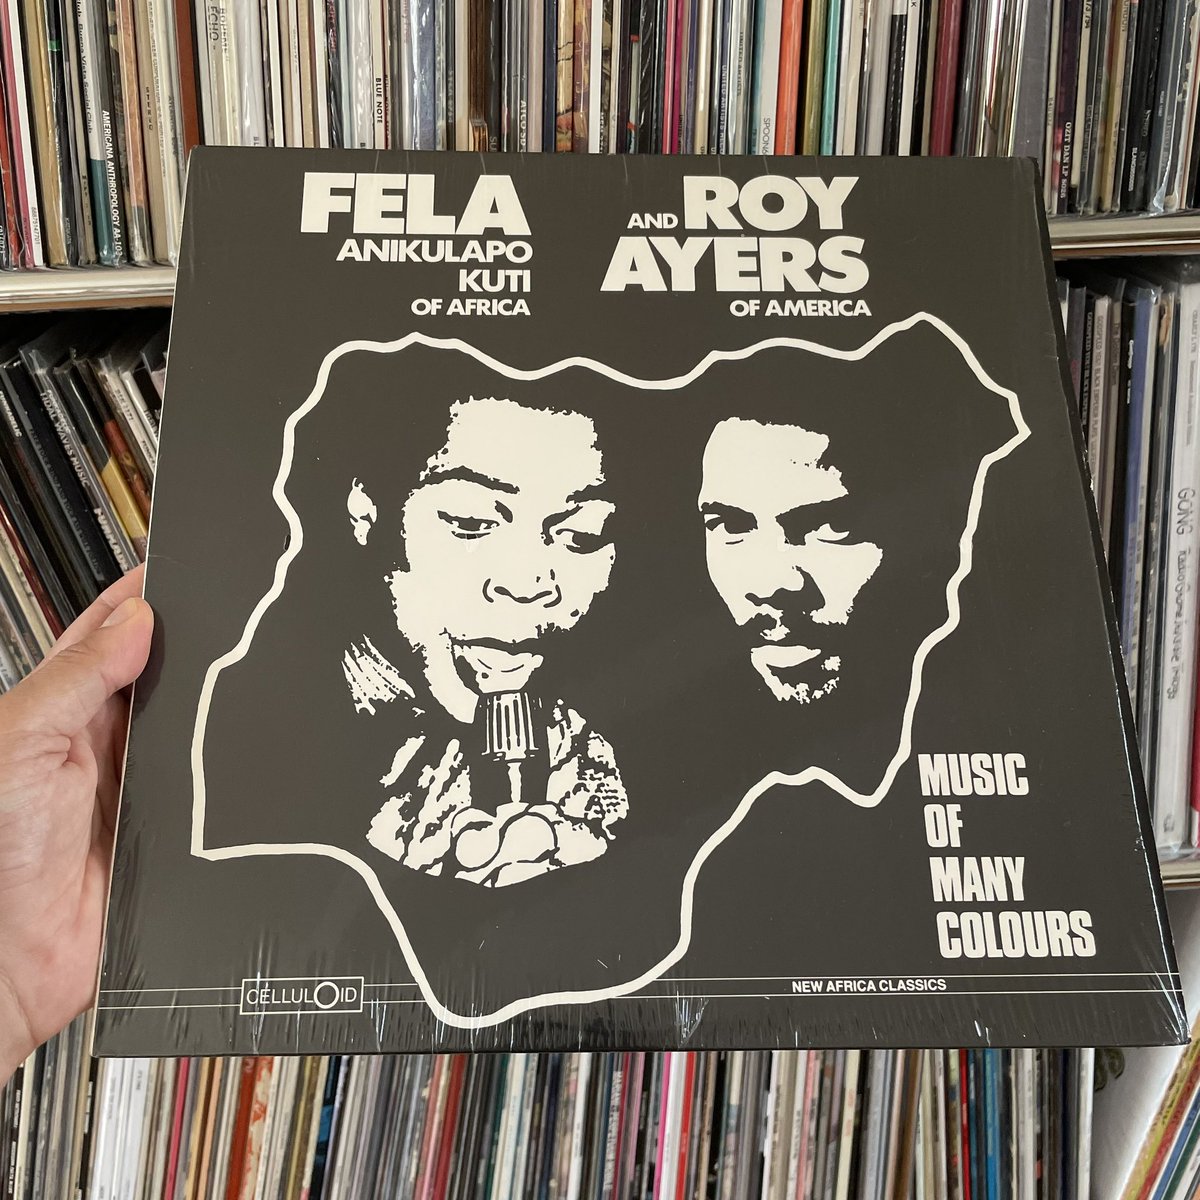 #NowPlaying Fela Kuti and Roy Ayers - Music Of Many Colors (Celluloid, 1986).

Essential jam 🔥

#FelaKuti #RoyAyers